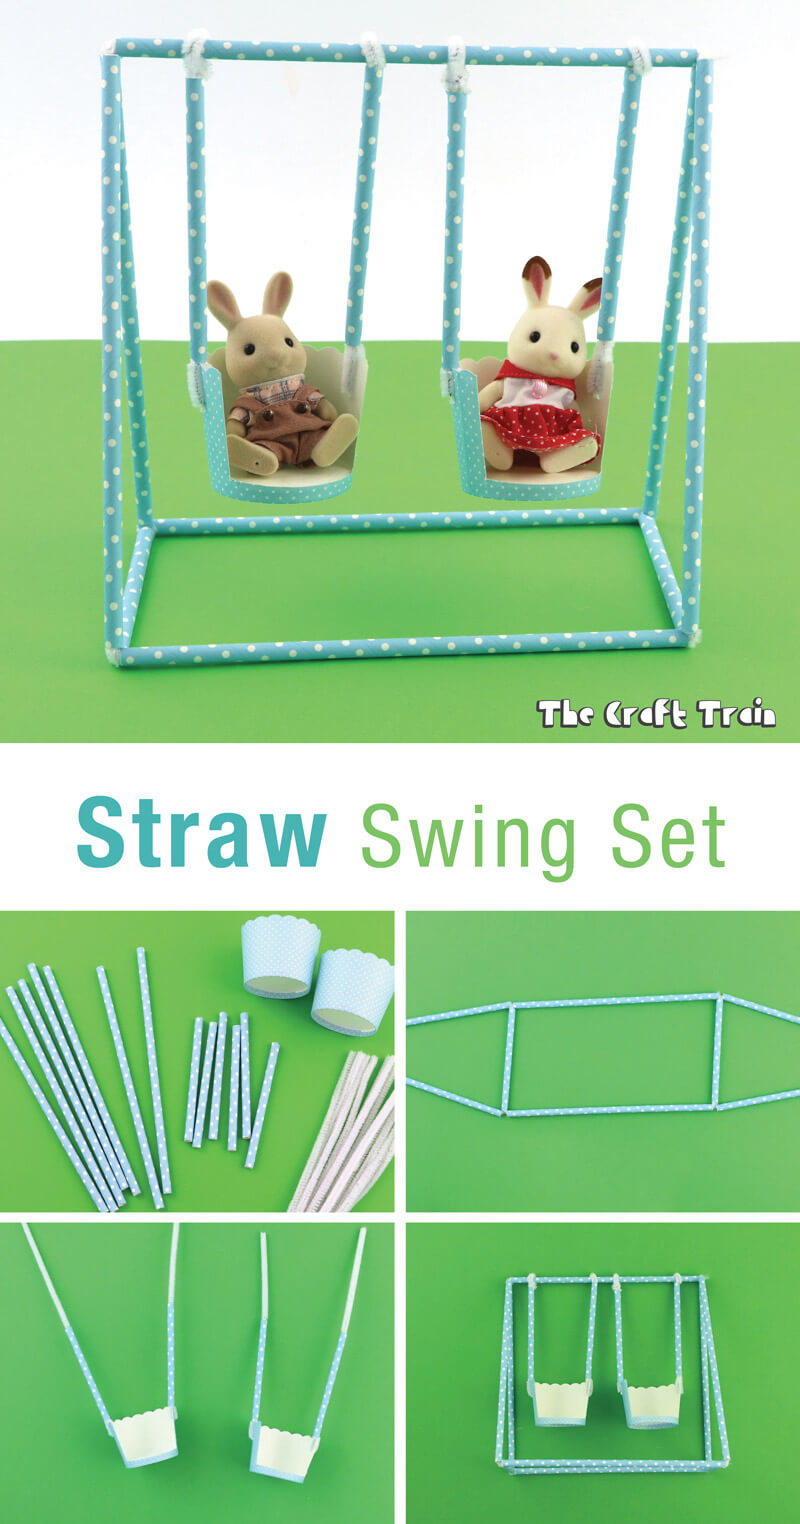 DIY straw swing set for imaginative play #STEAM #STEM #DIYtoy #straws #strawconstruction #kidscrafts #imaginativeplay